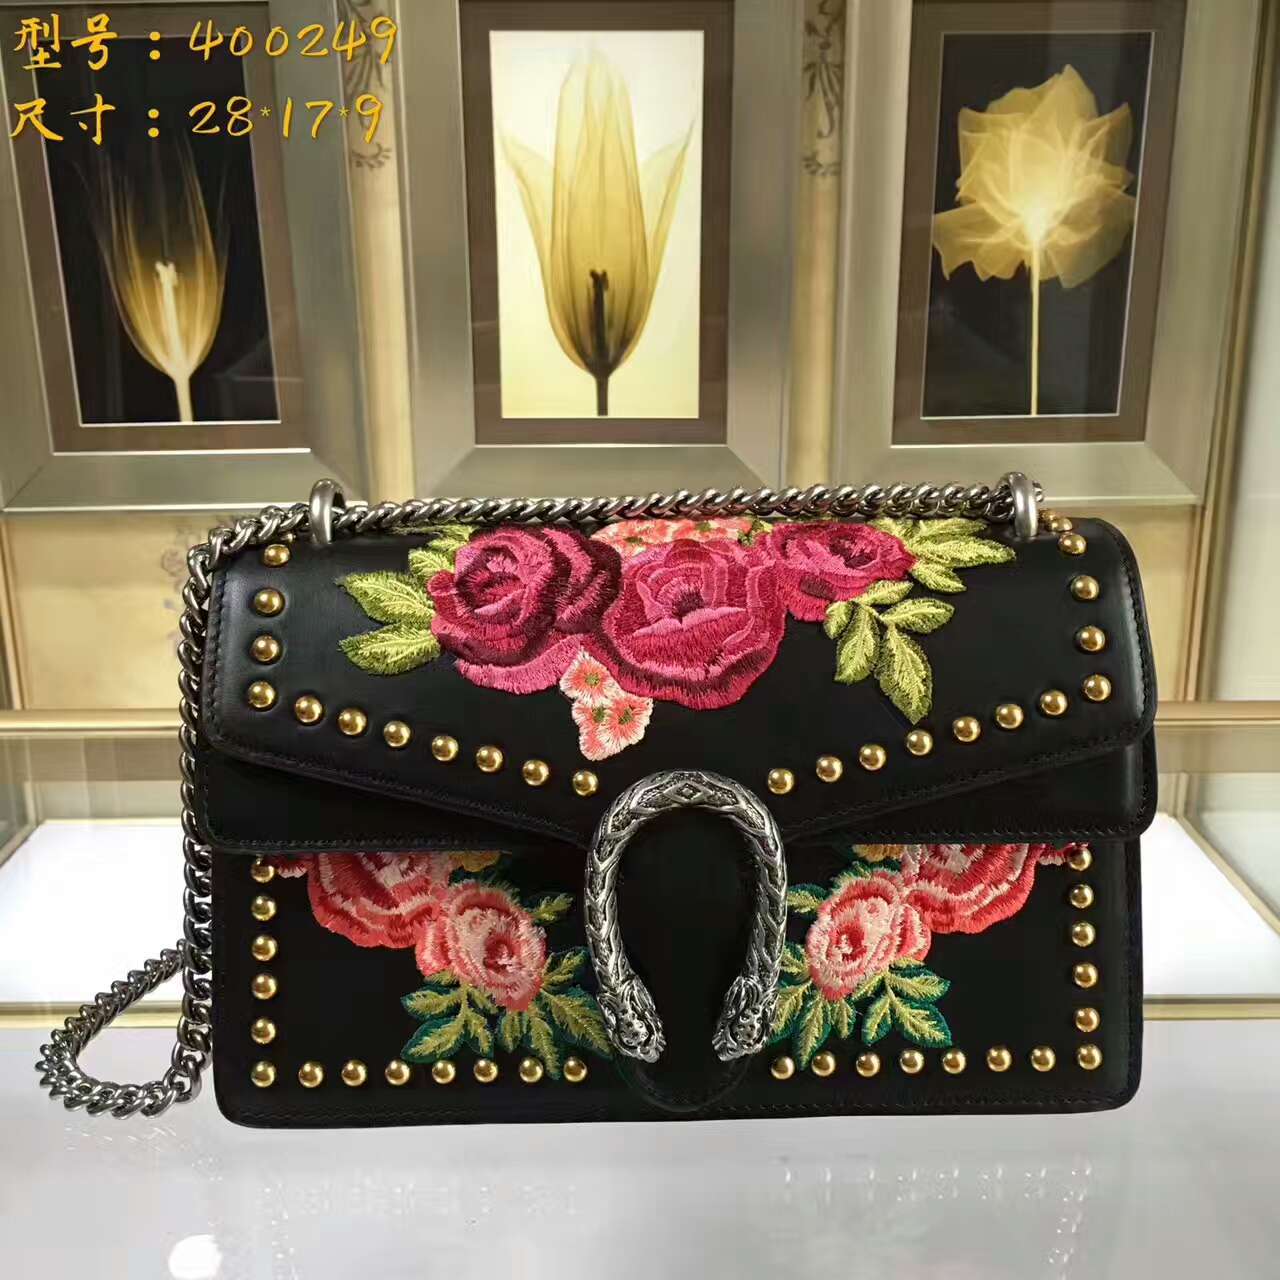 Gucci Dionysus embroidered shoulder bag-400249-txgc017(5)